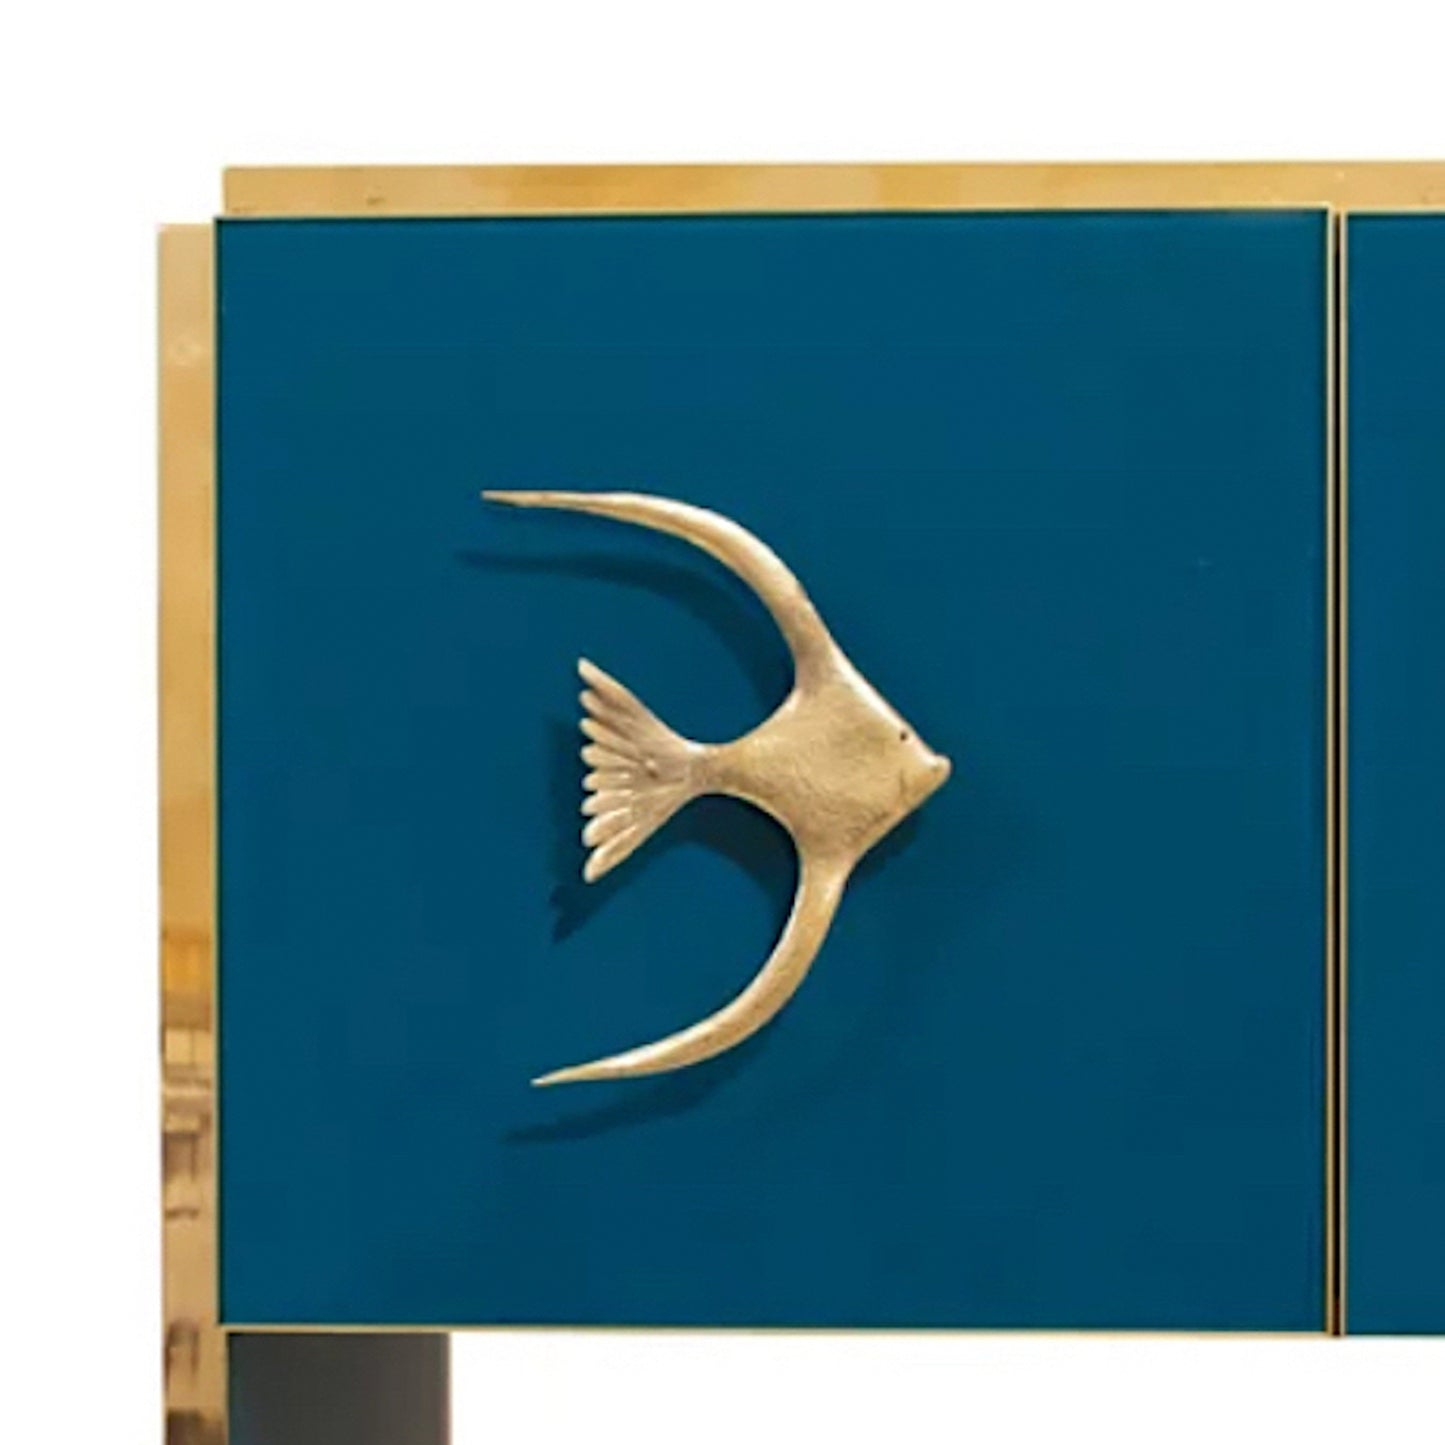 Modern Italian Custom Design Brass Edged & Fish Marine Decor Teal Blue Cabinet